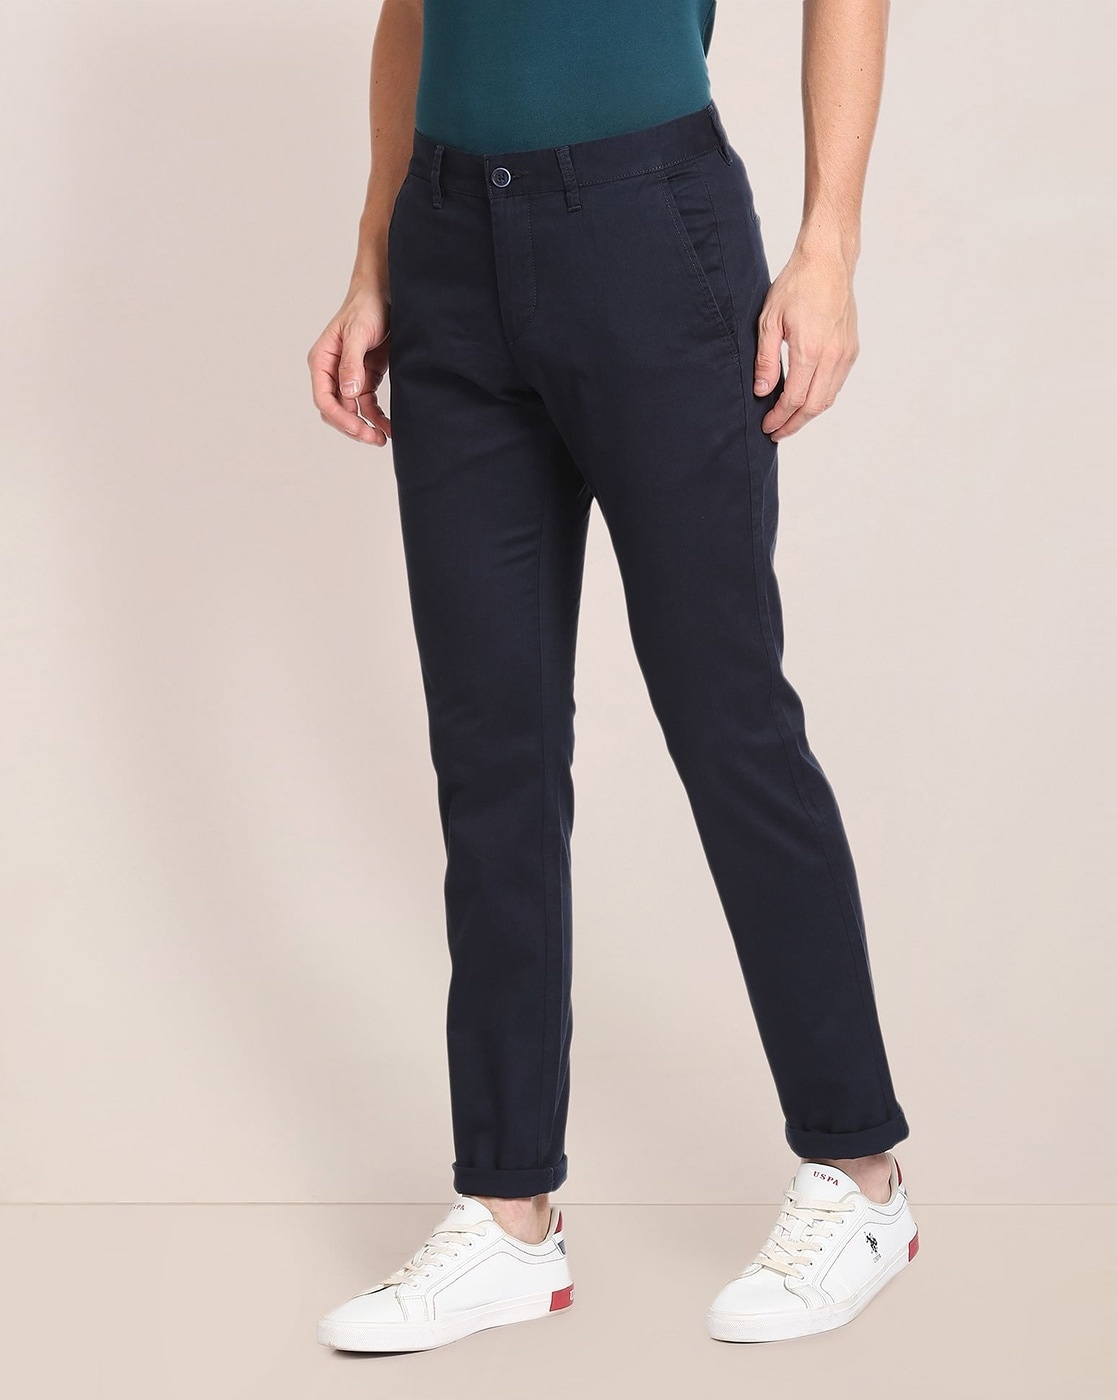 $98.5 Polo Ralph Lauren Men's, Stretch Slim Fit Chino Pants, Grey, 32X32 |  eBay